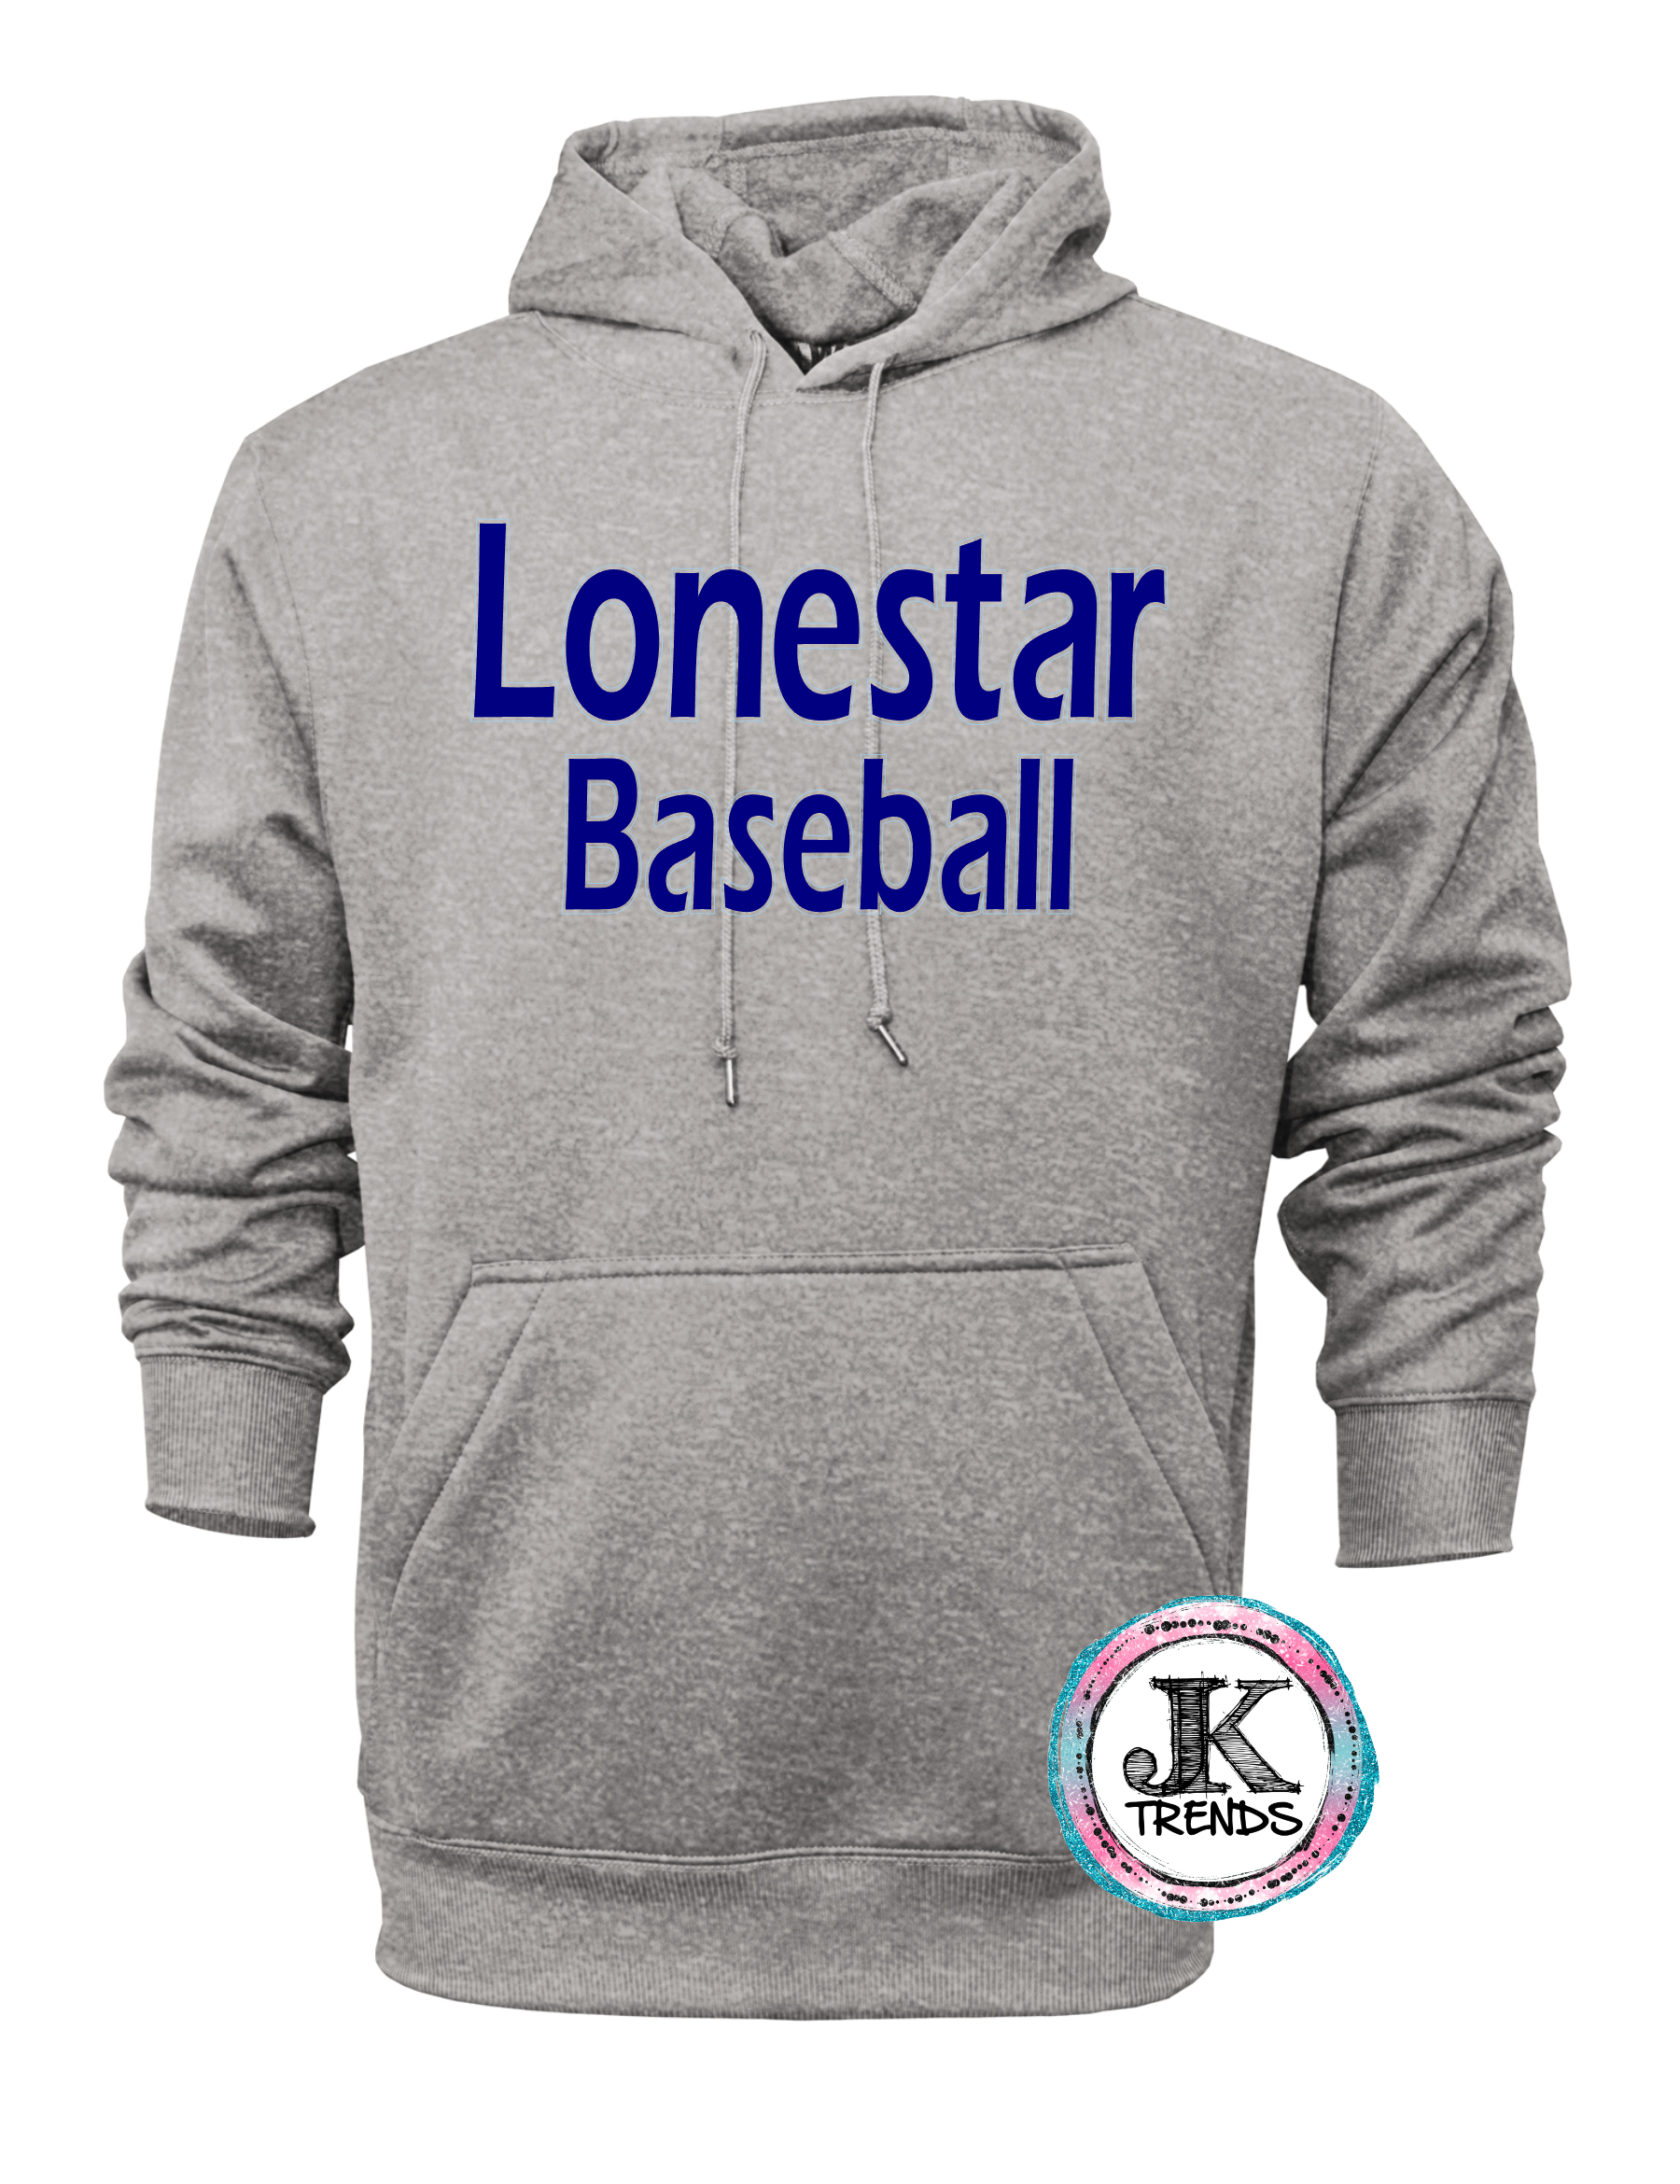 Lonestar Baseball Performance Hoodie